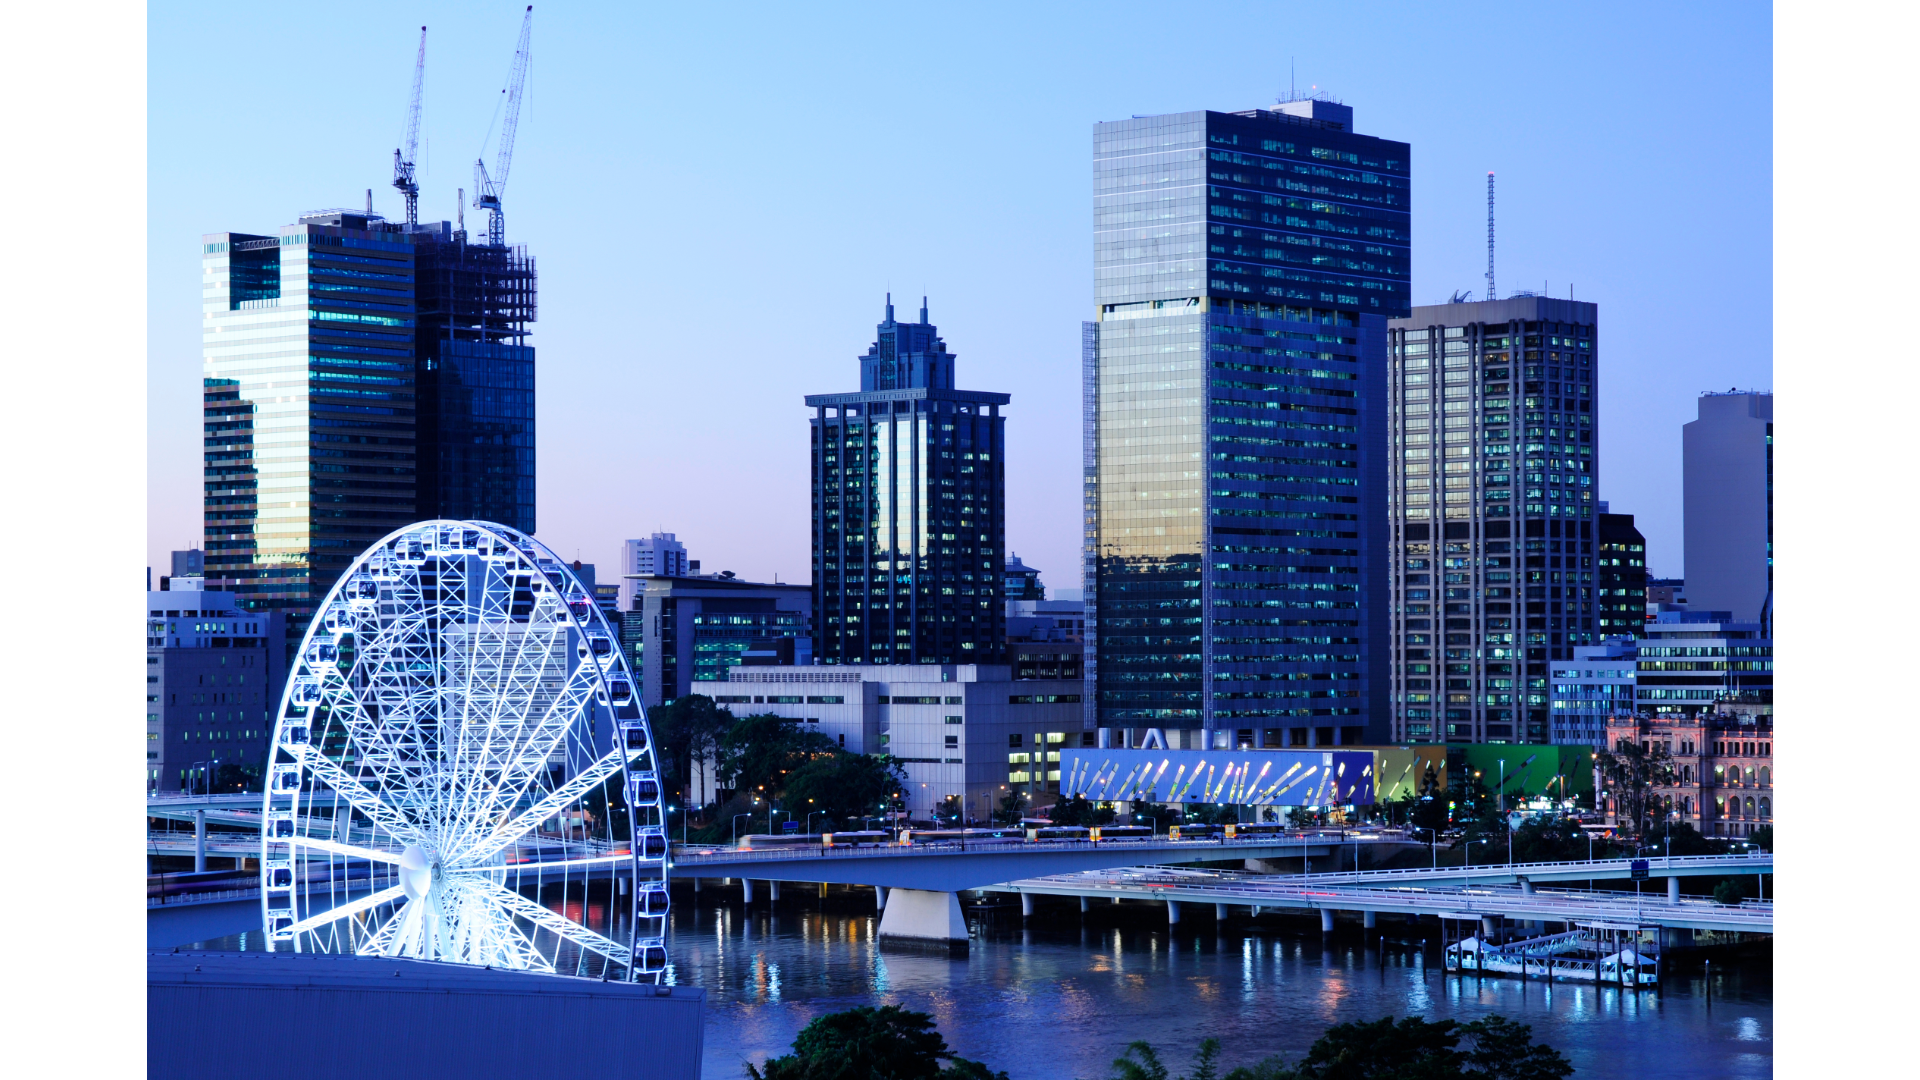 The Wheel of Brisbane